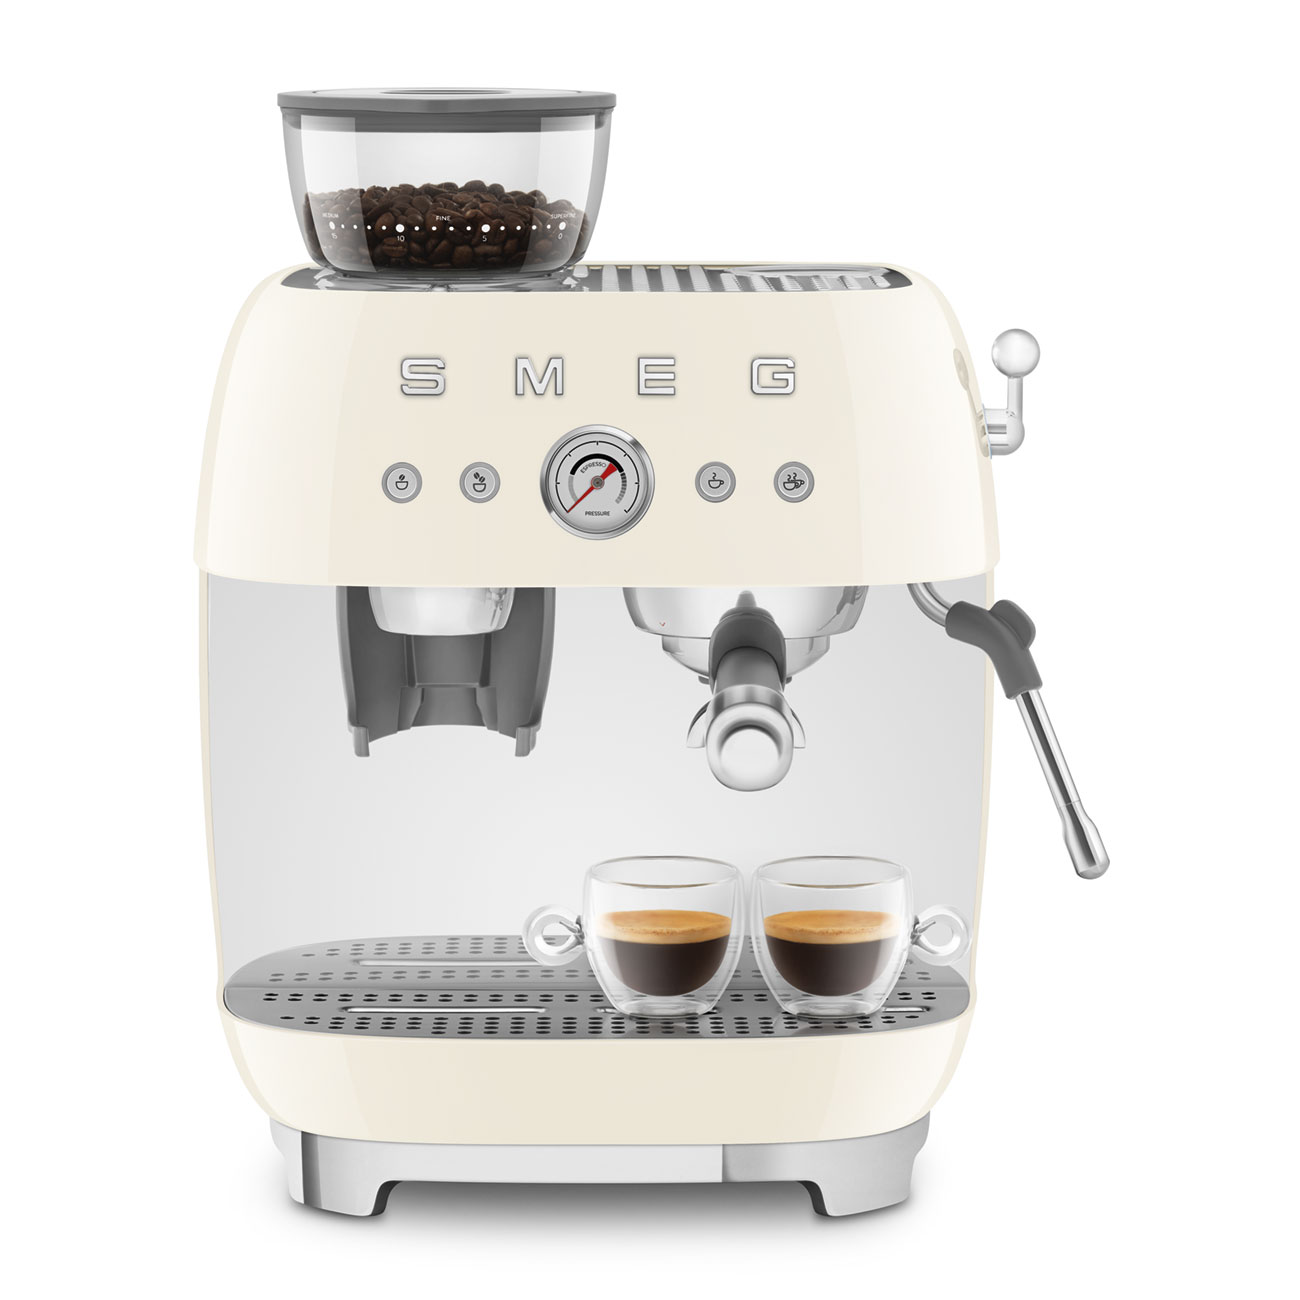 Smeg Cream Espresso Manual Coffee Machine with Grinder_8